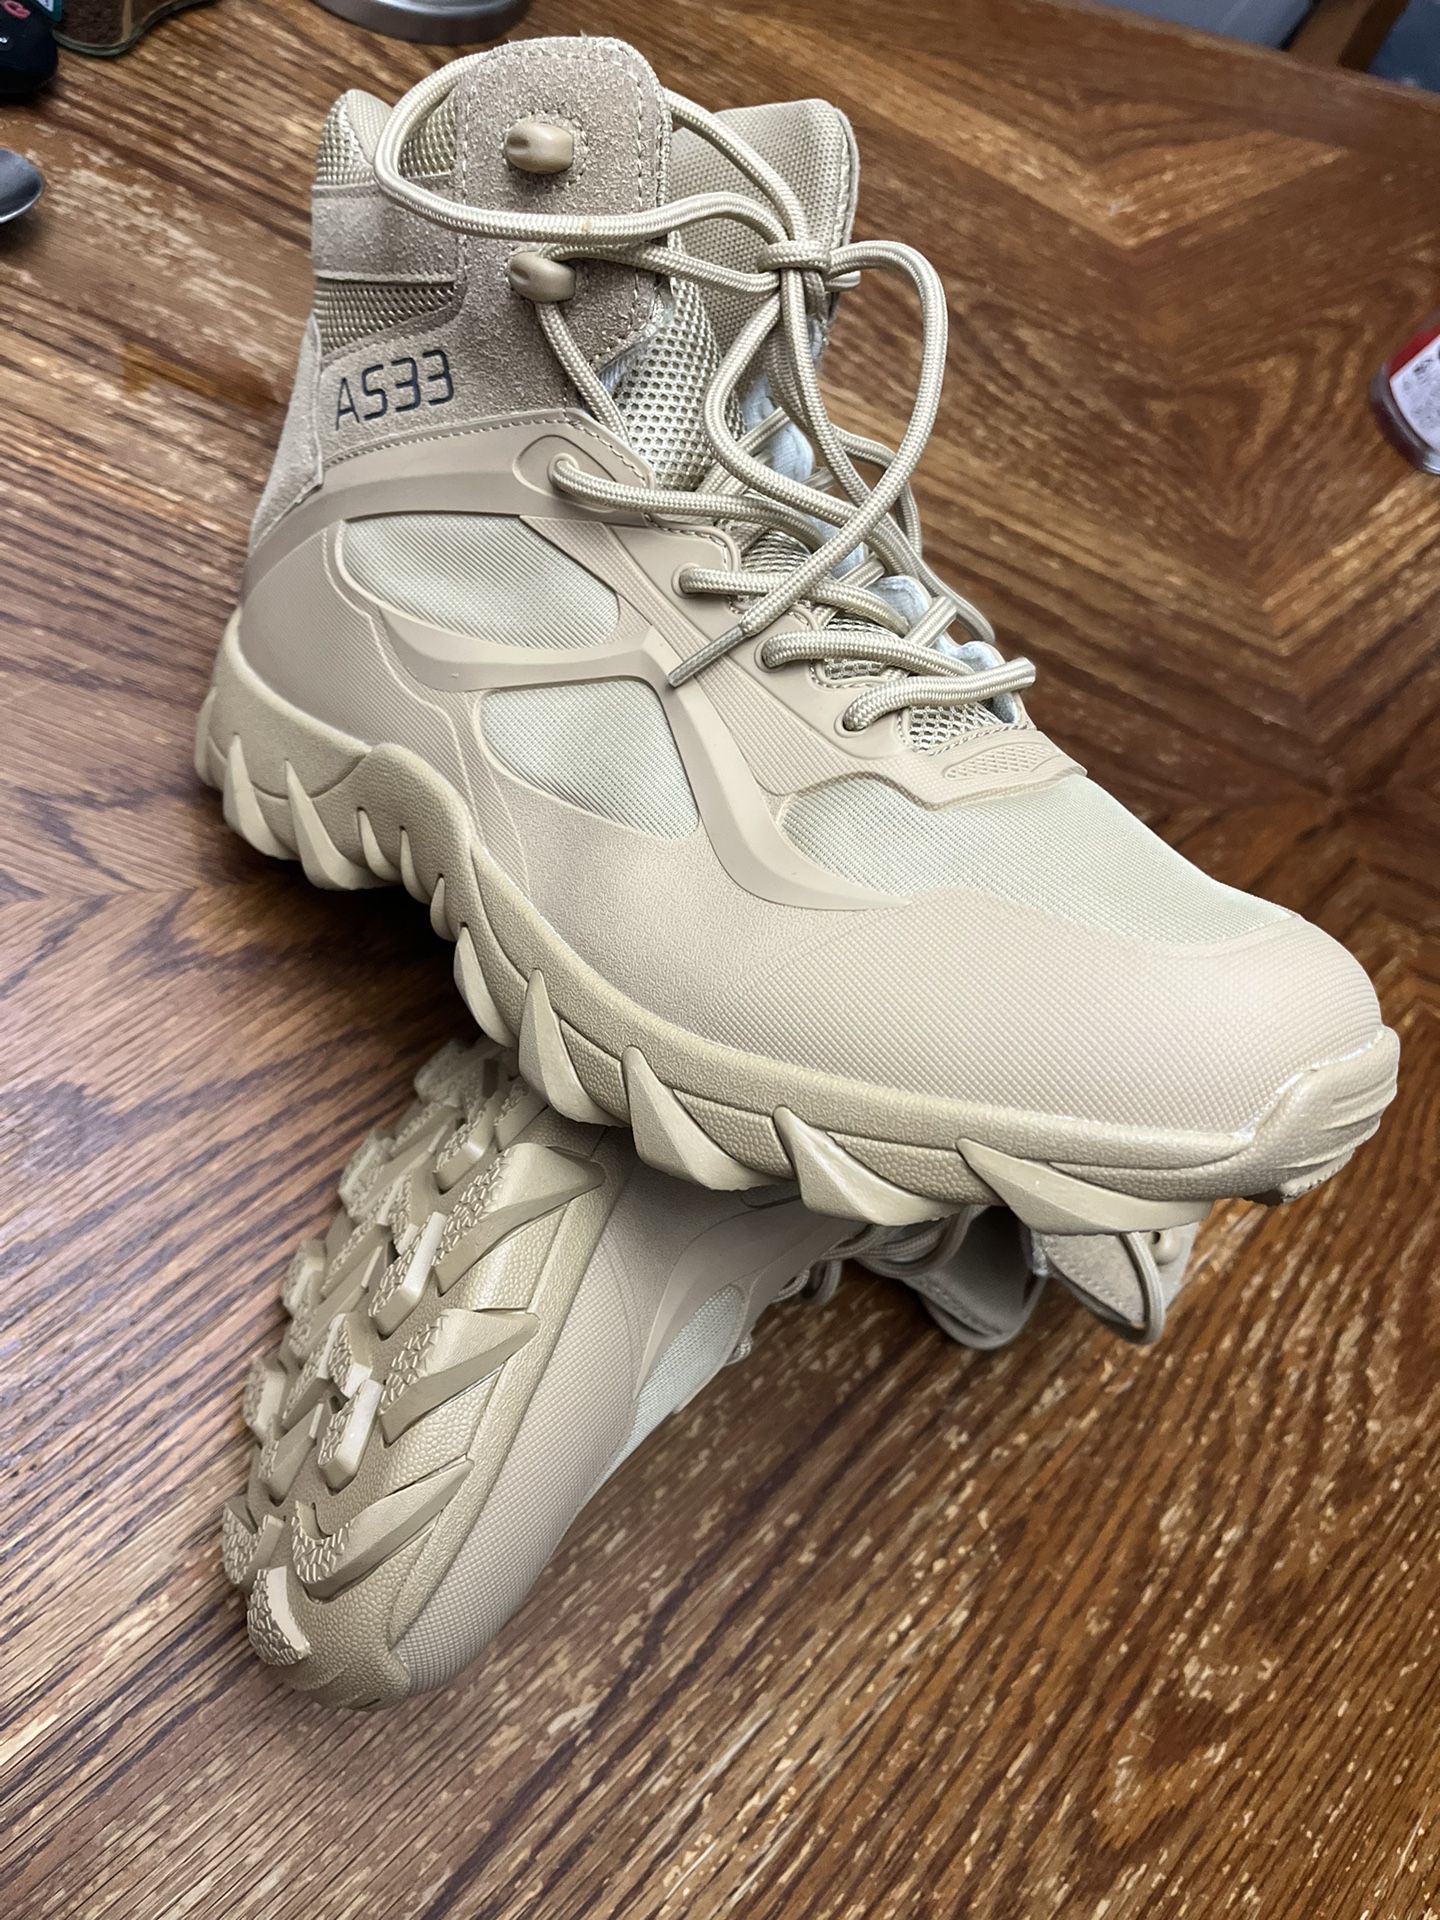 Size 10.5-11 Mens Tactical Boots